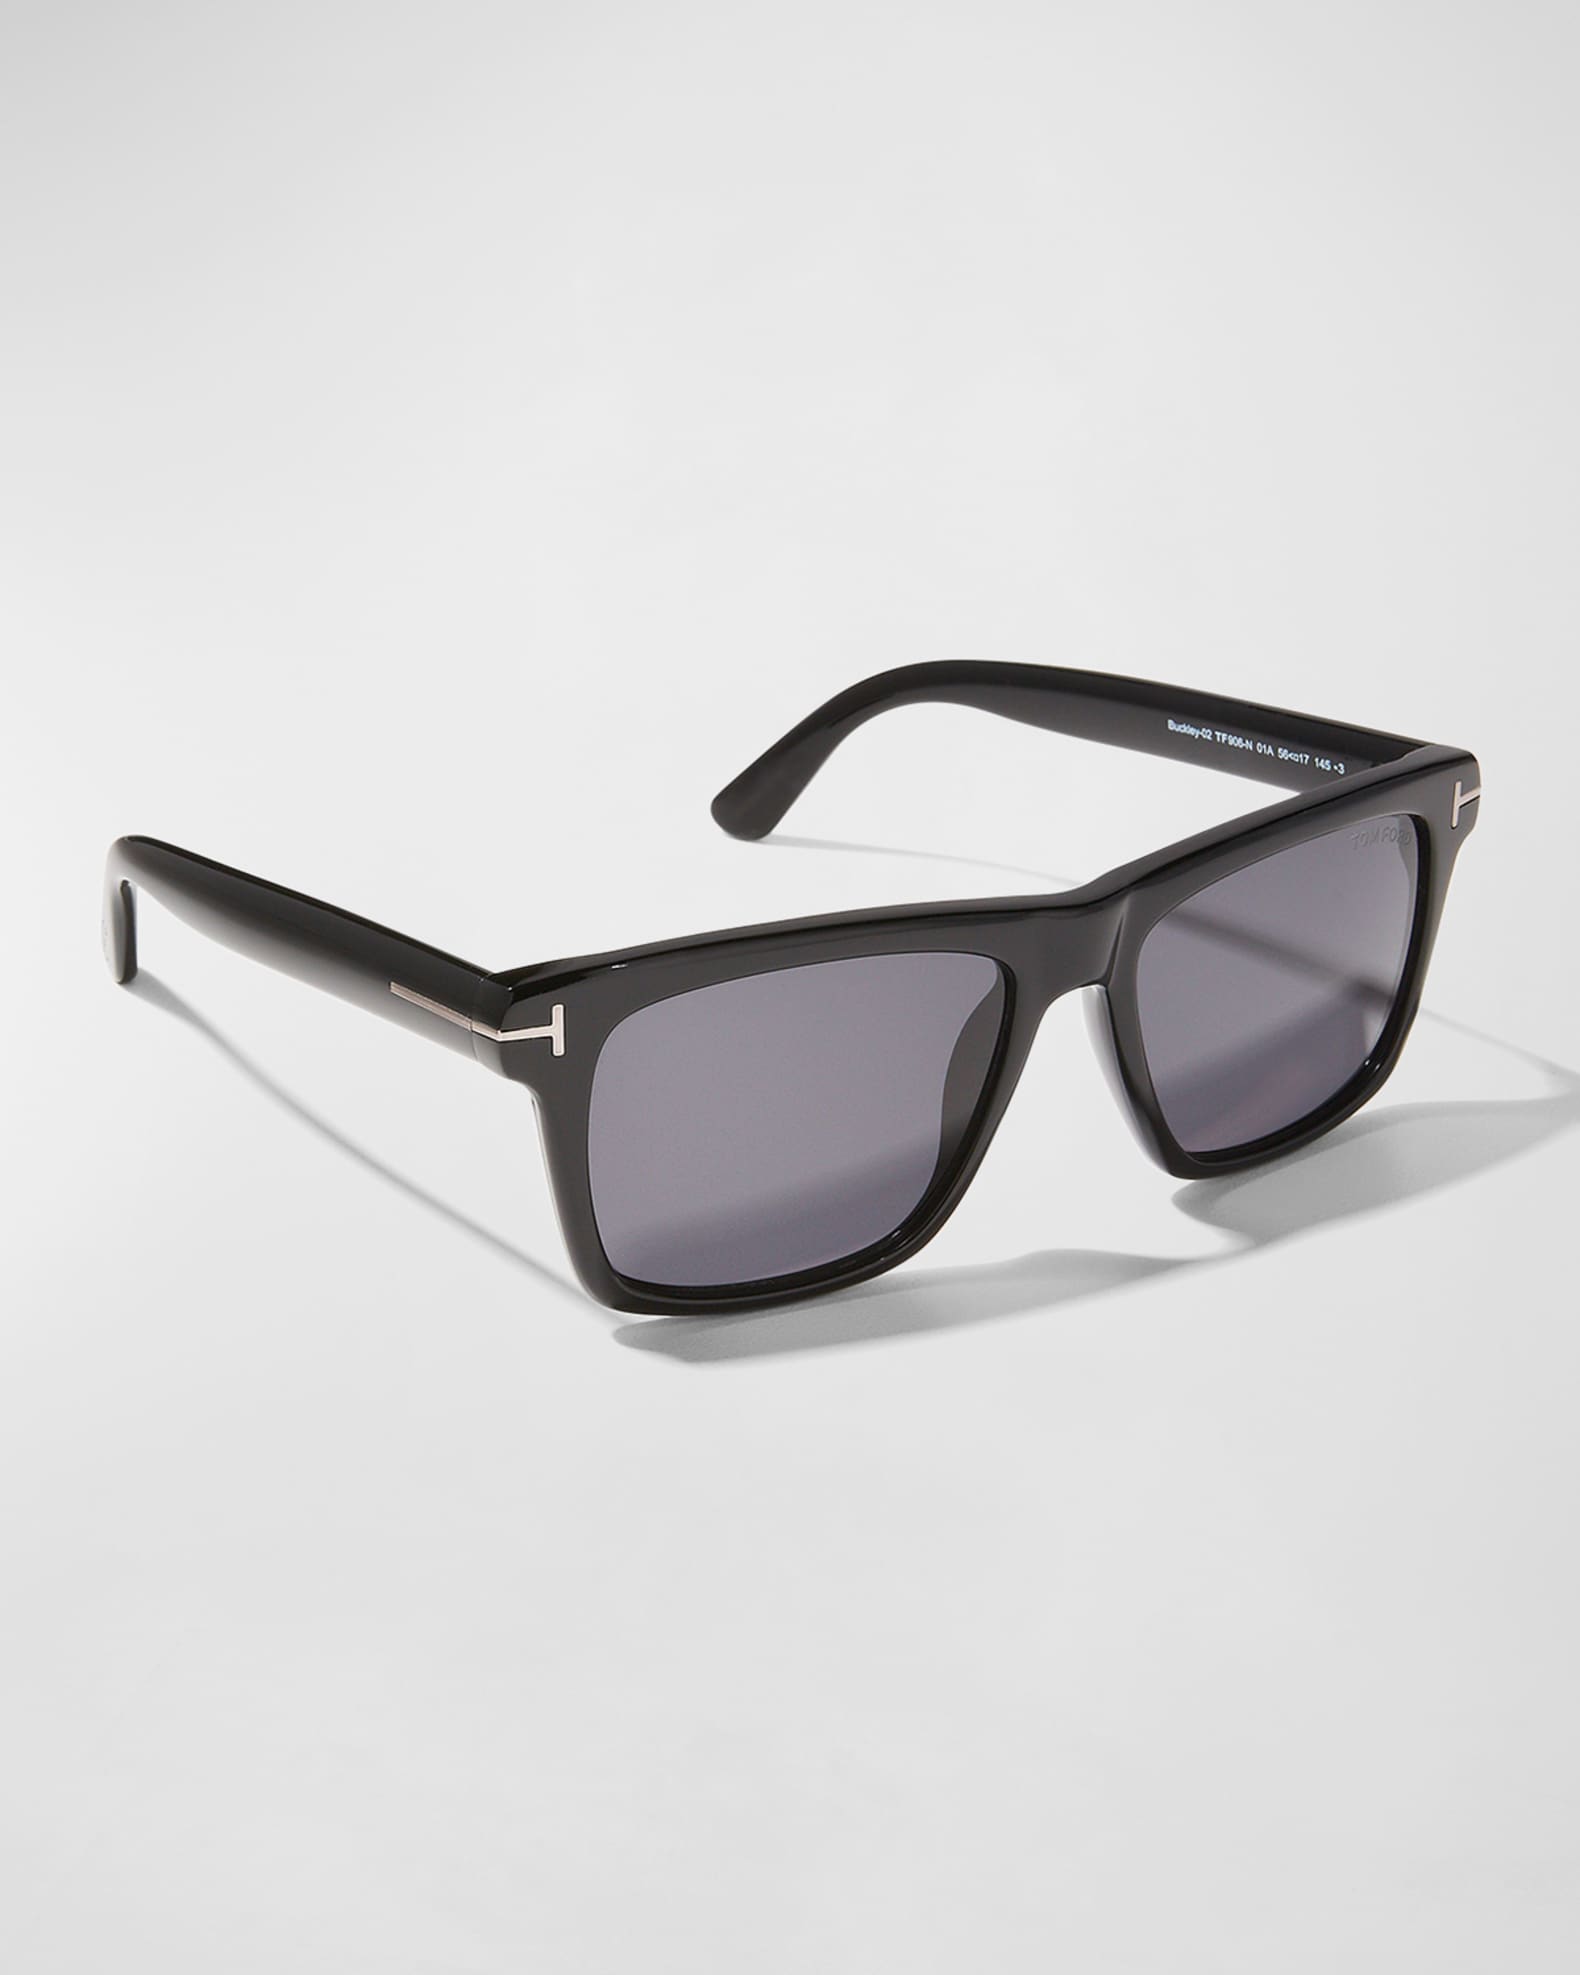 FORD Men's Square Sunglasses Neiman Marcus